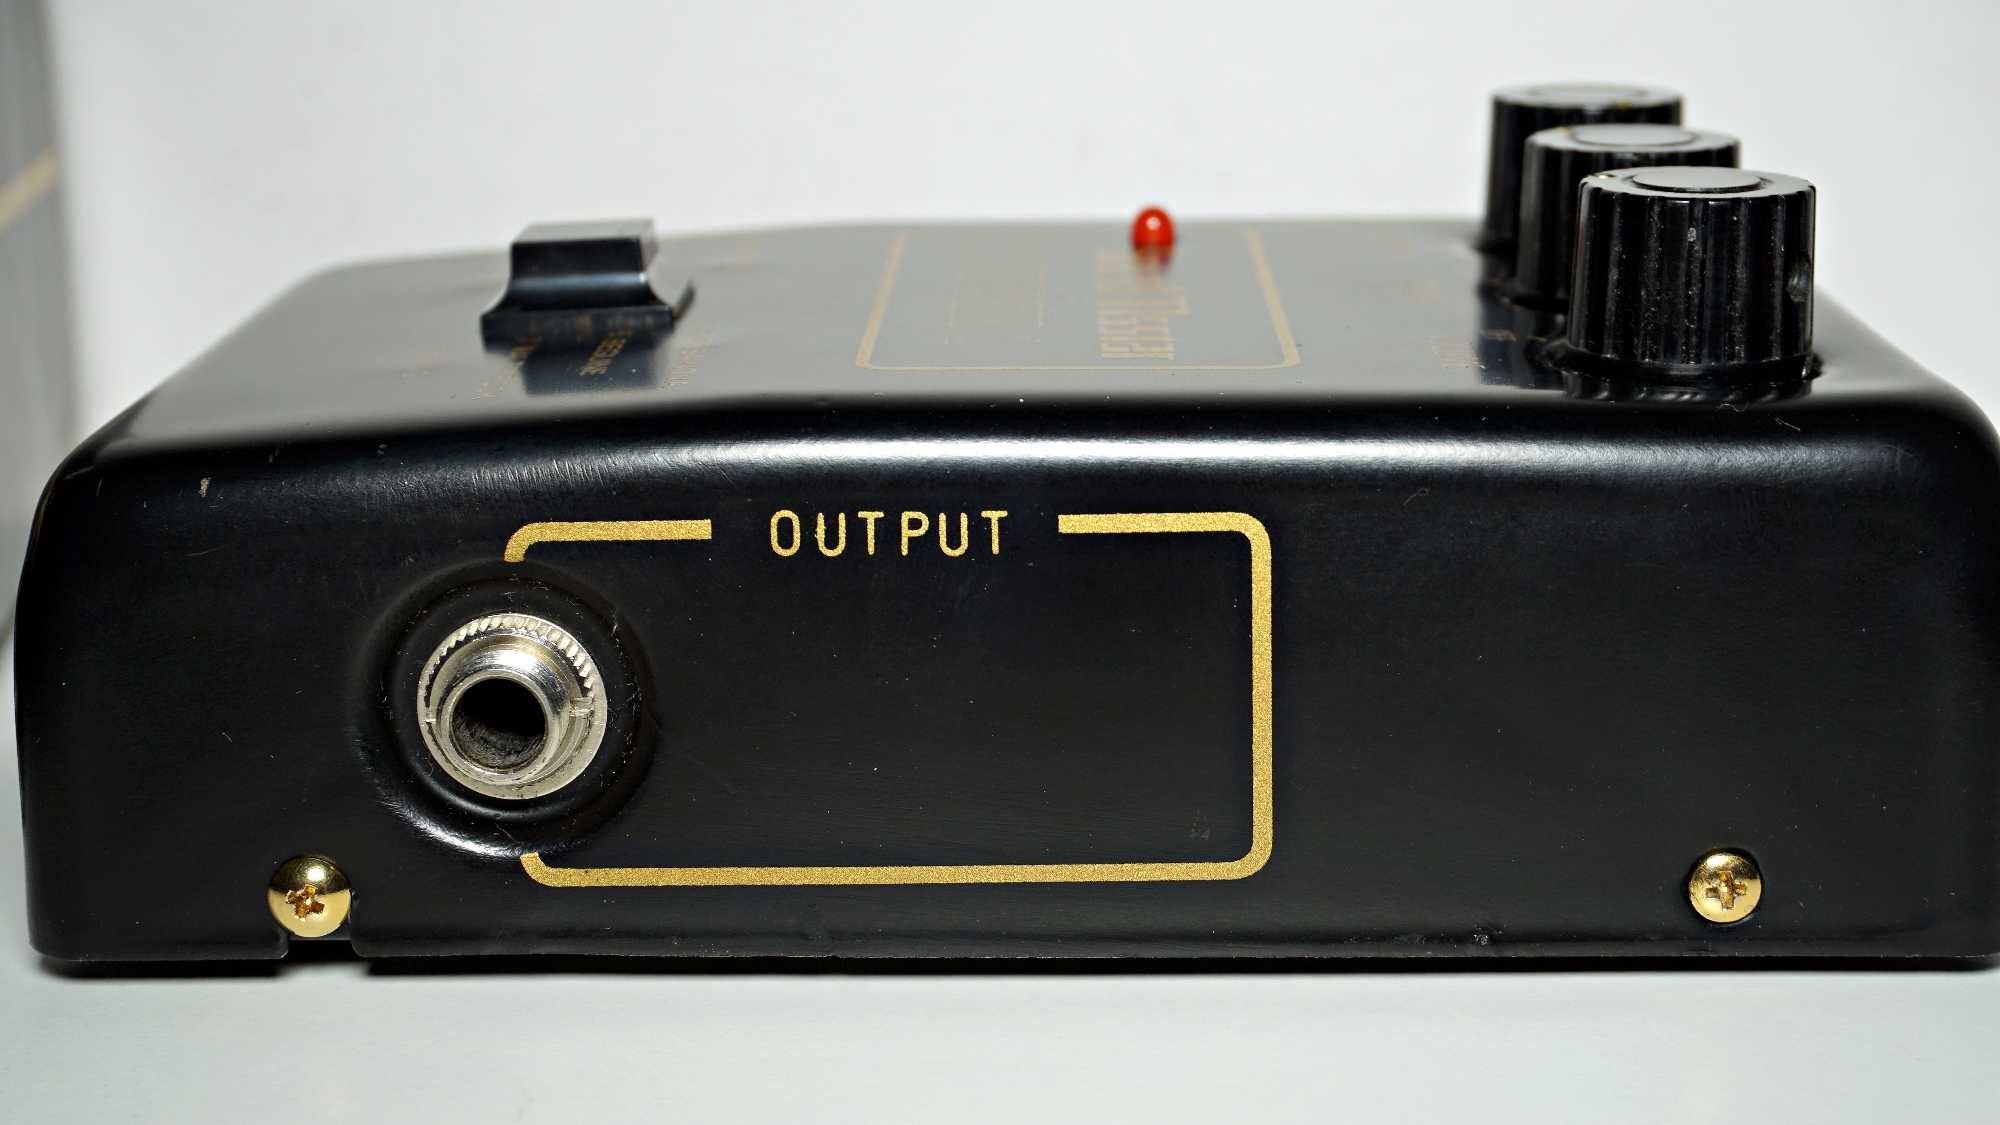 Automat perkusyjny sound master 1 sm-8 analog maszyna perkusyjna